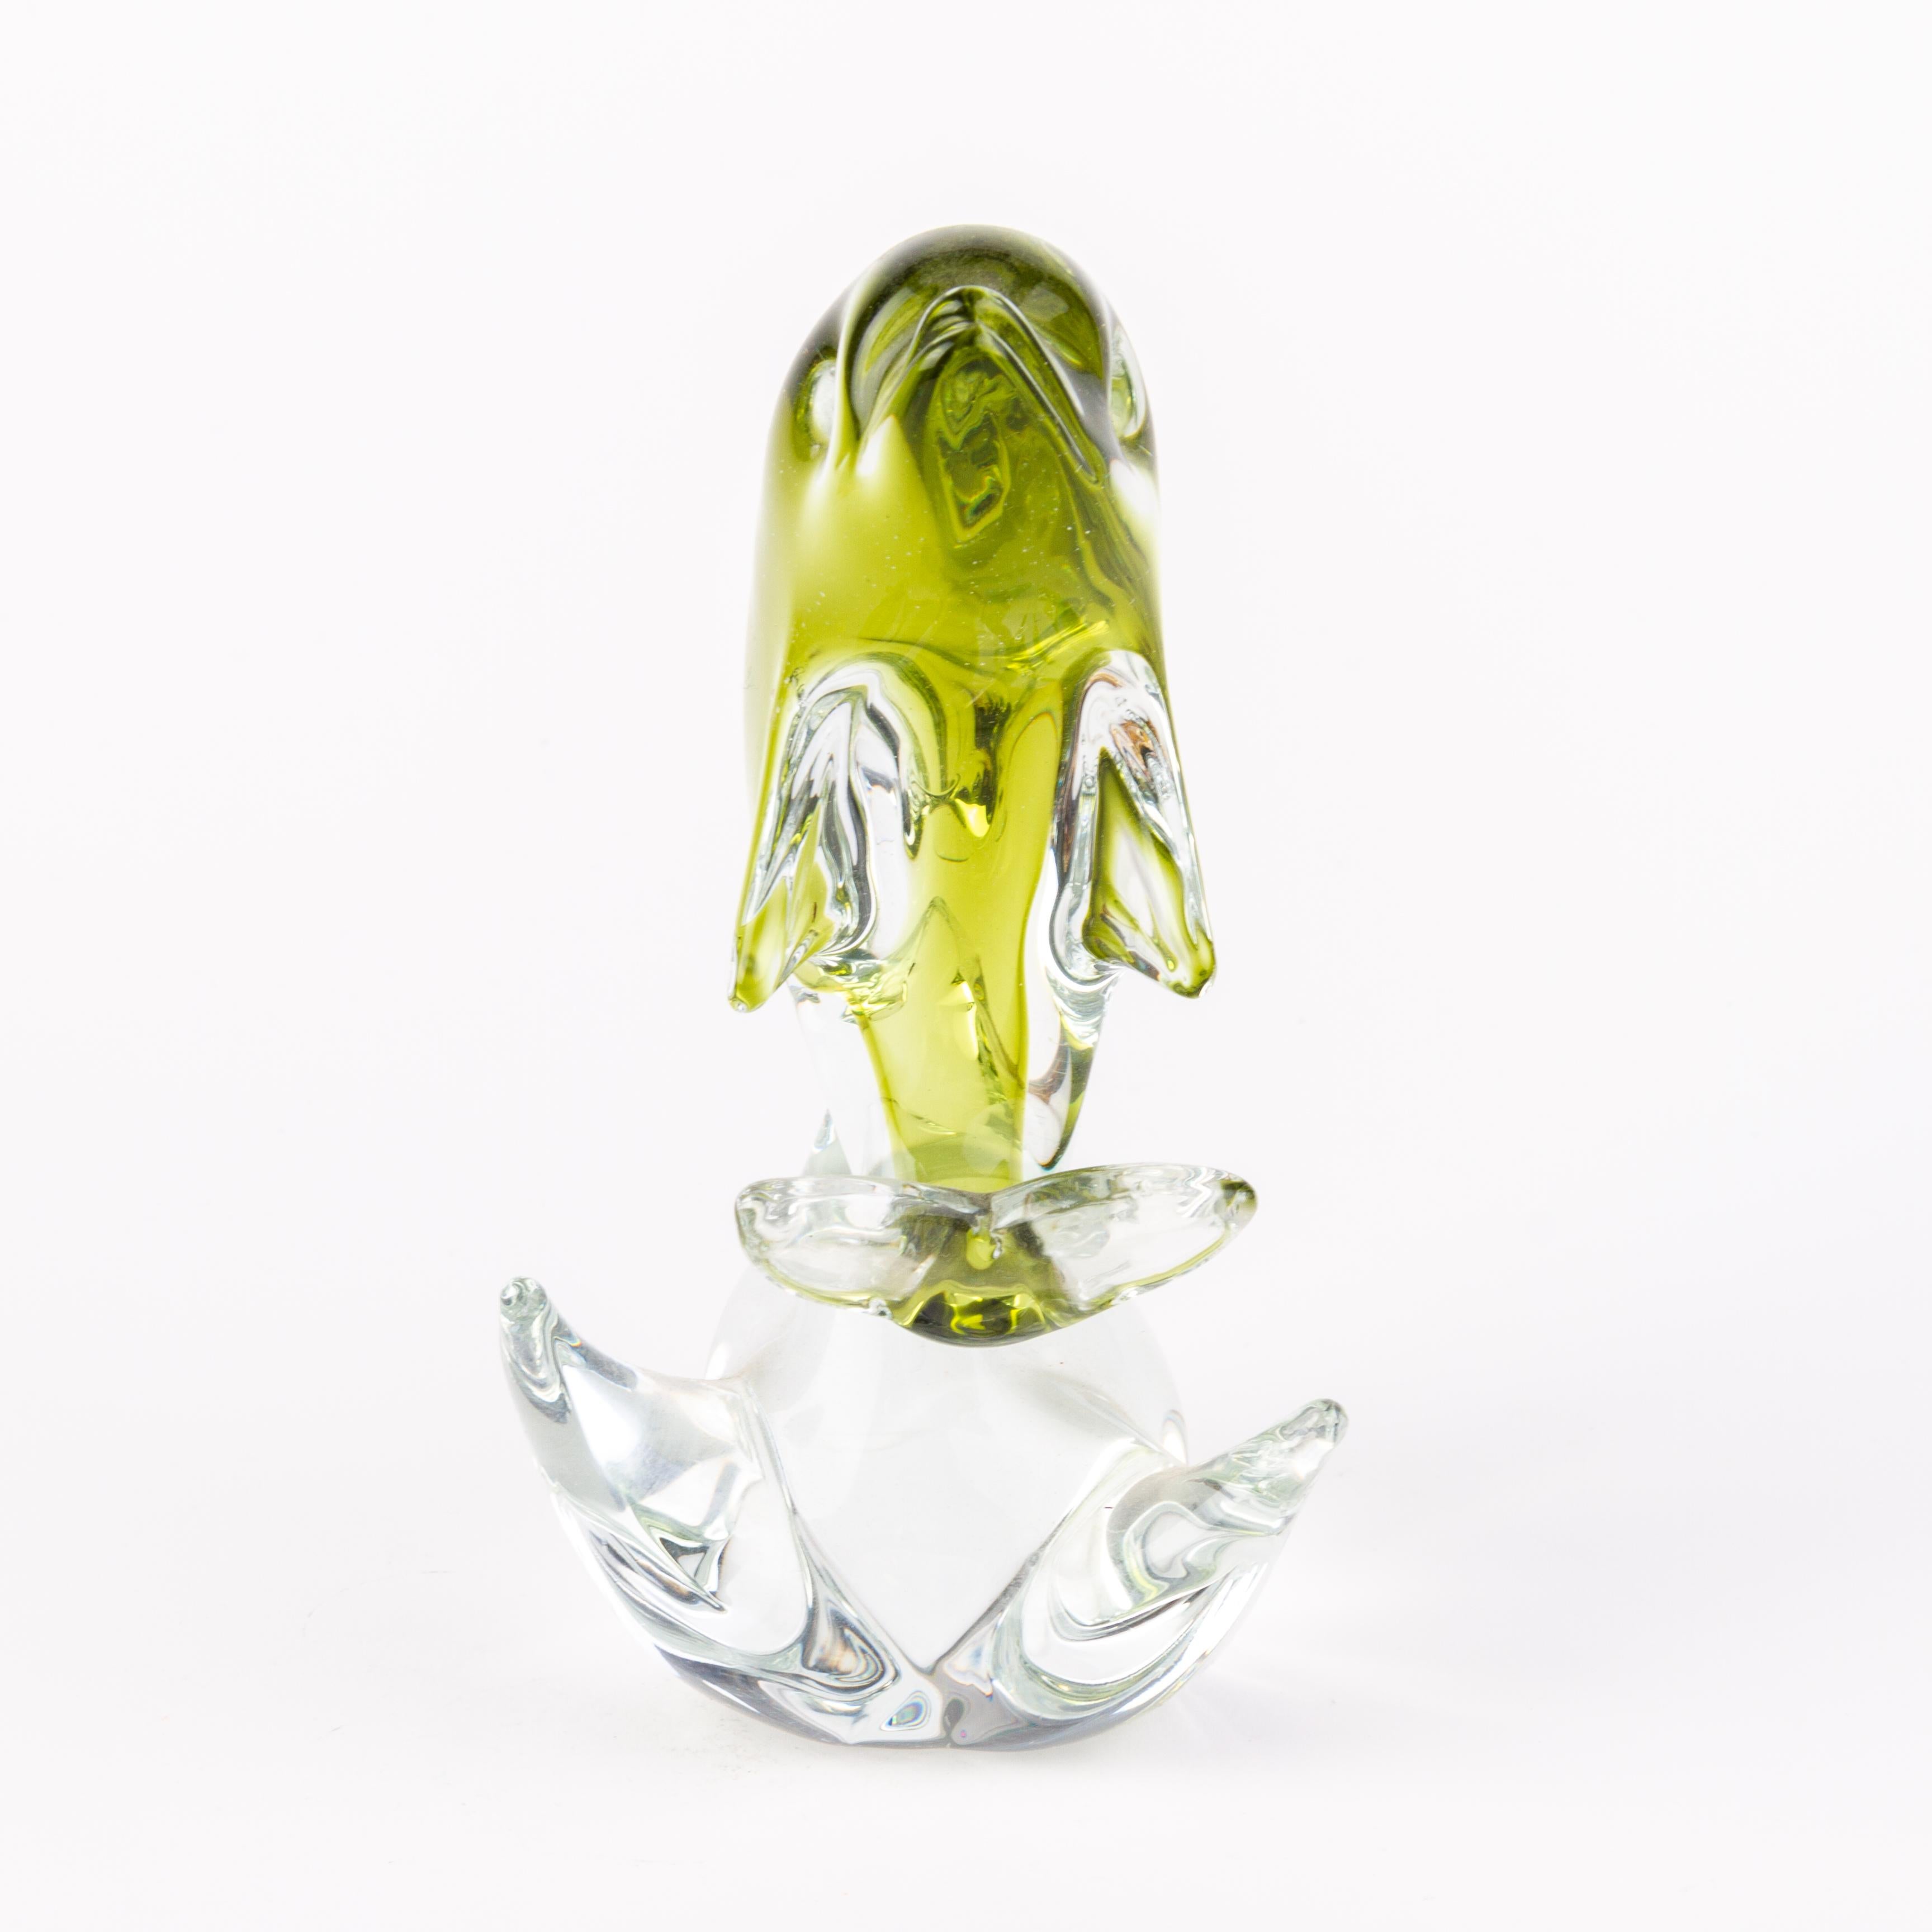 Murano Venetian Glass Designer Sculpture Dolphin
Good condition
Free international shipping.